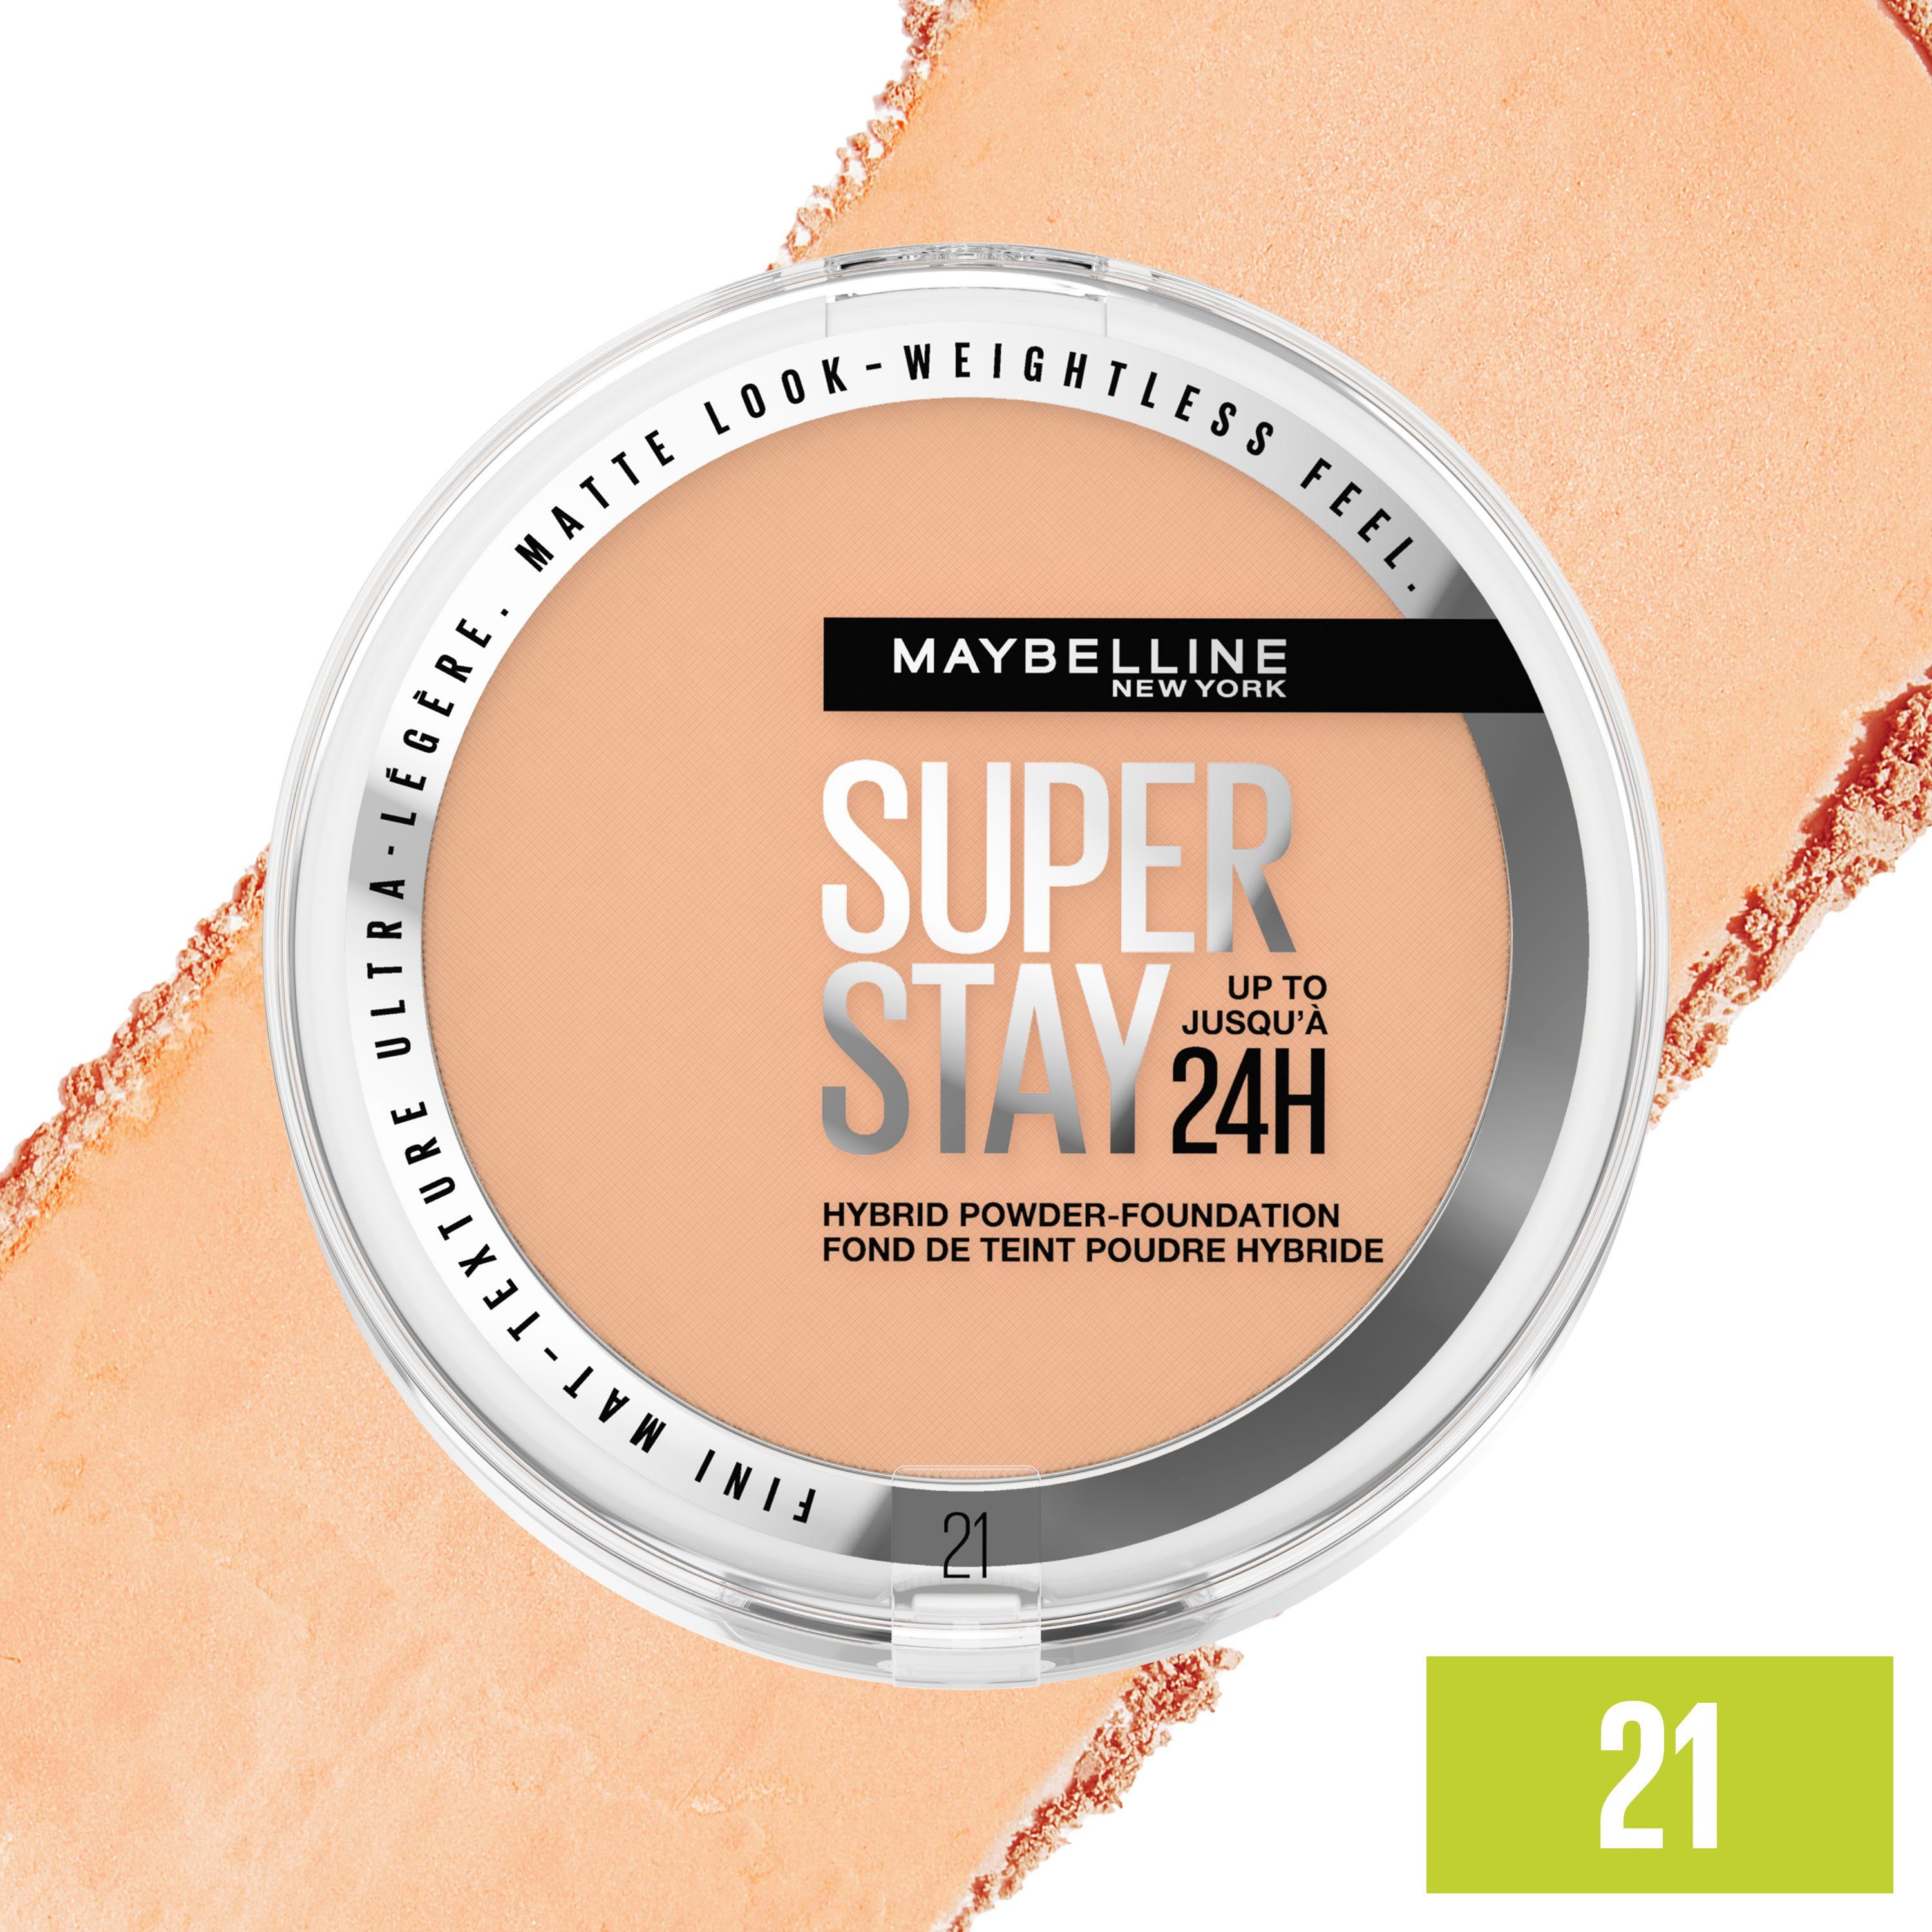 MAYBELLINE NEW York New Hybrides Foundation Maybelline YORK Make-Up Stay Super Puder